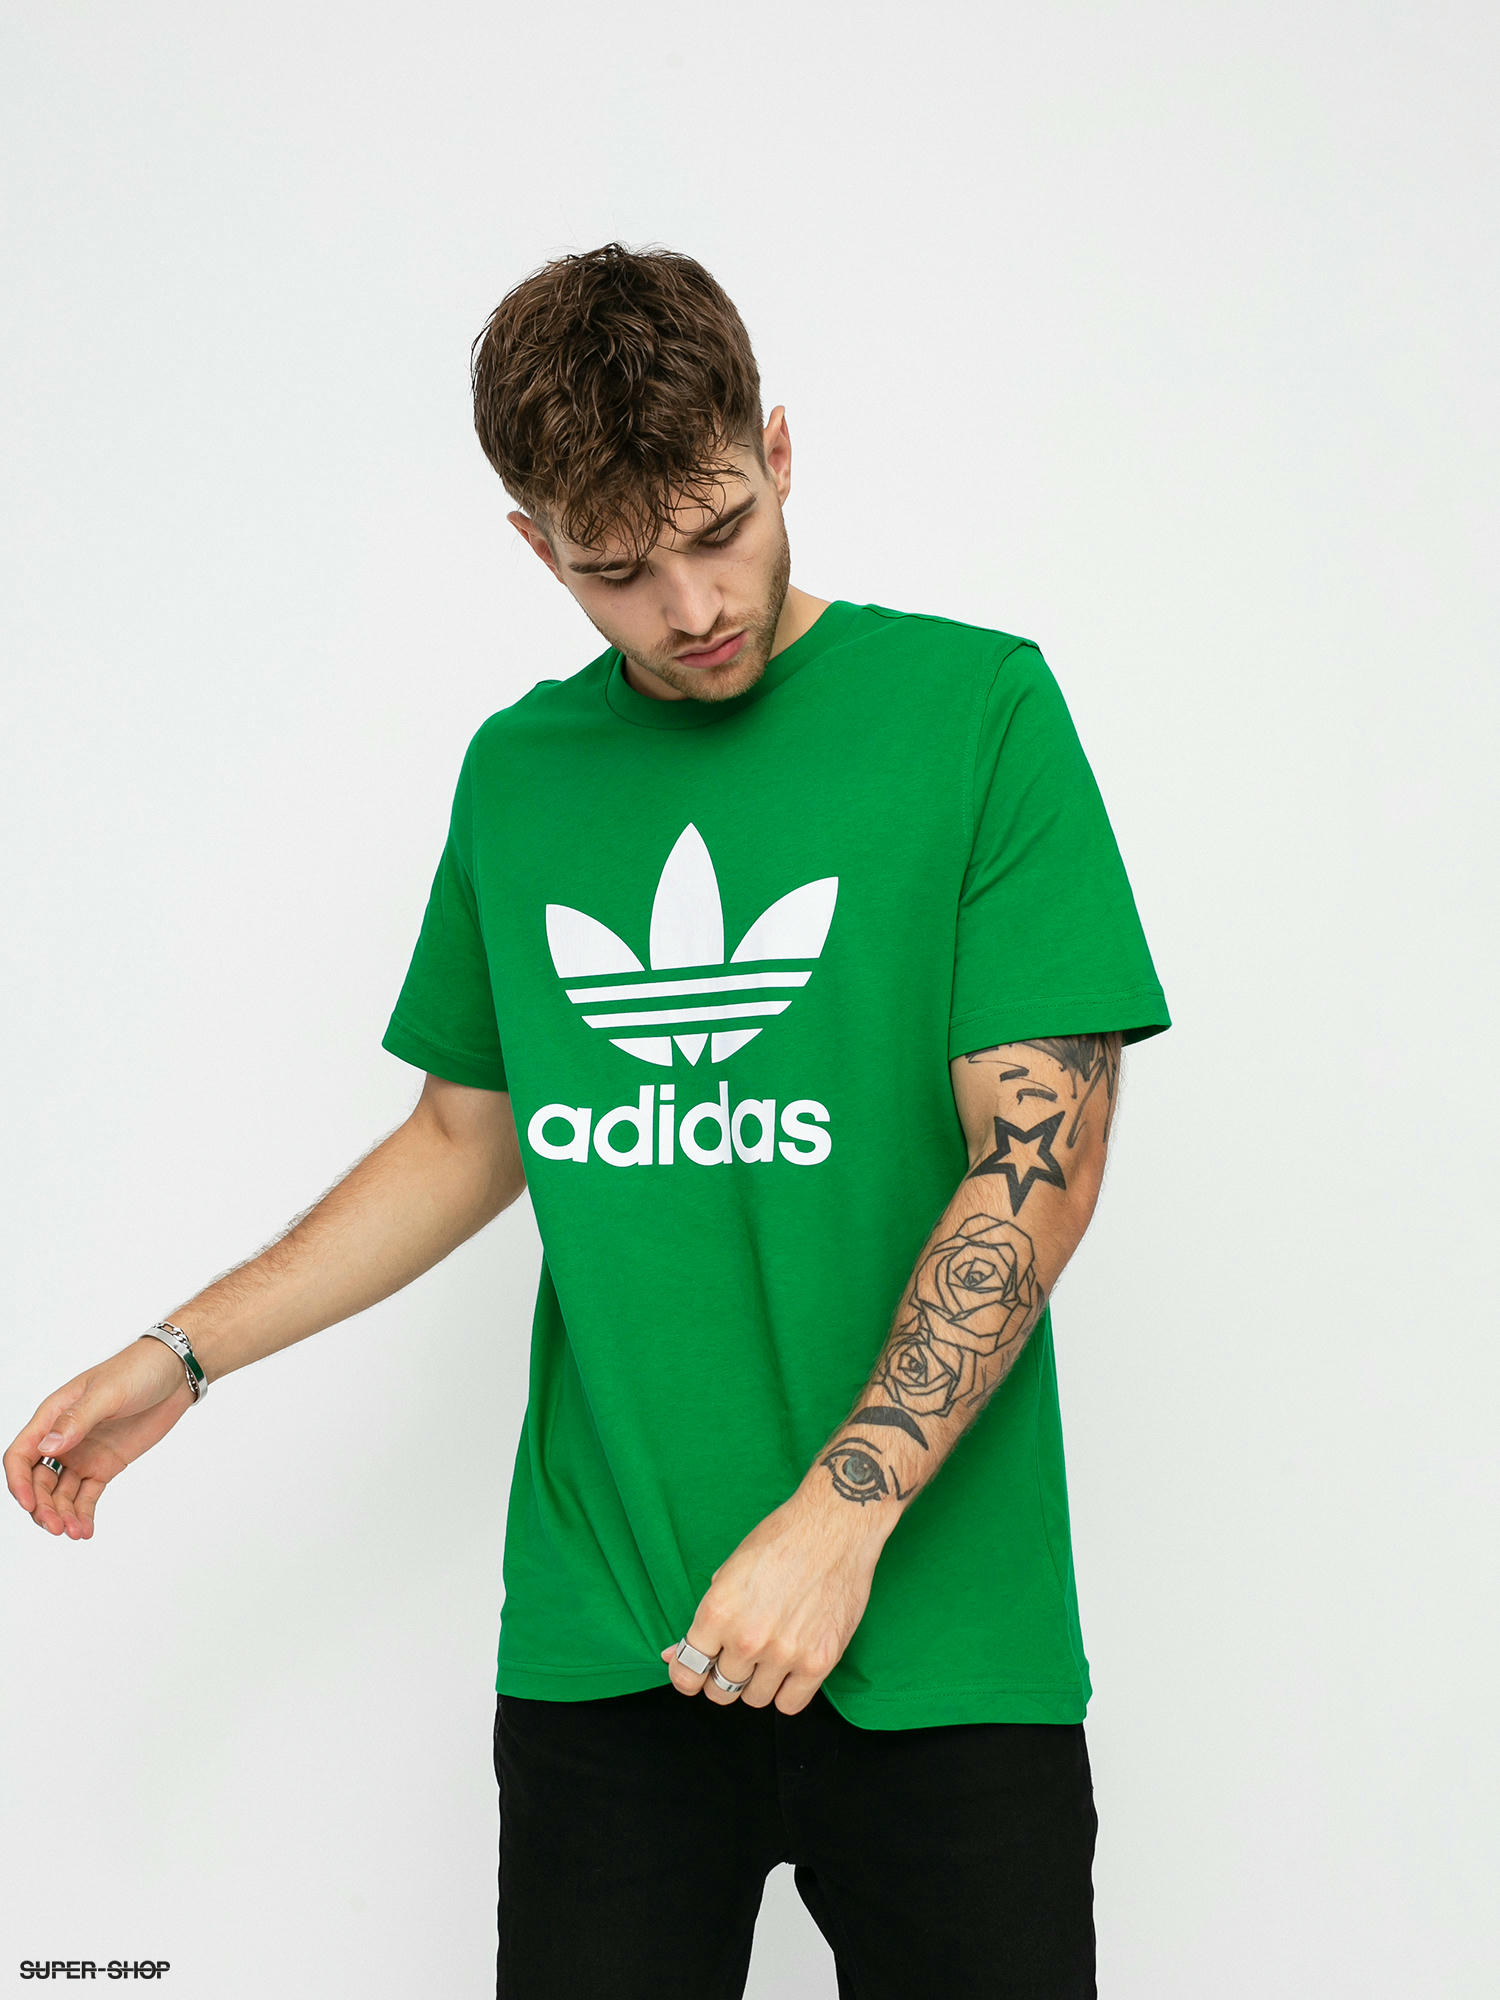 Adidas Men's T-Shirt - Green - L